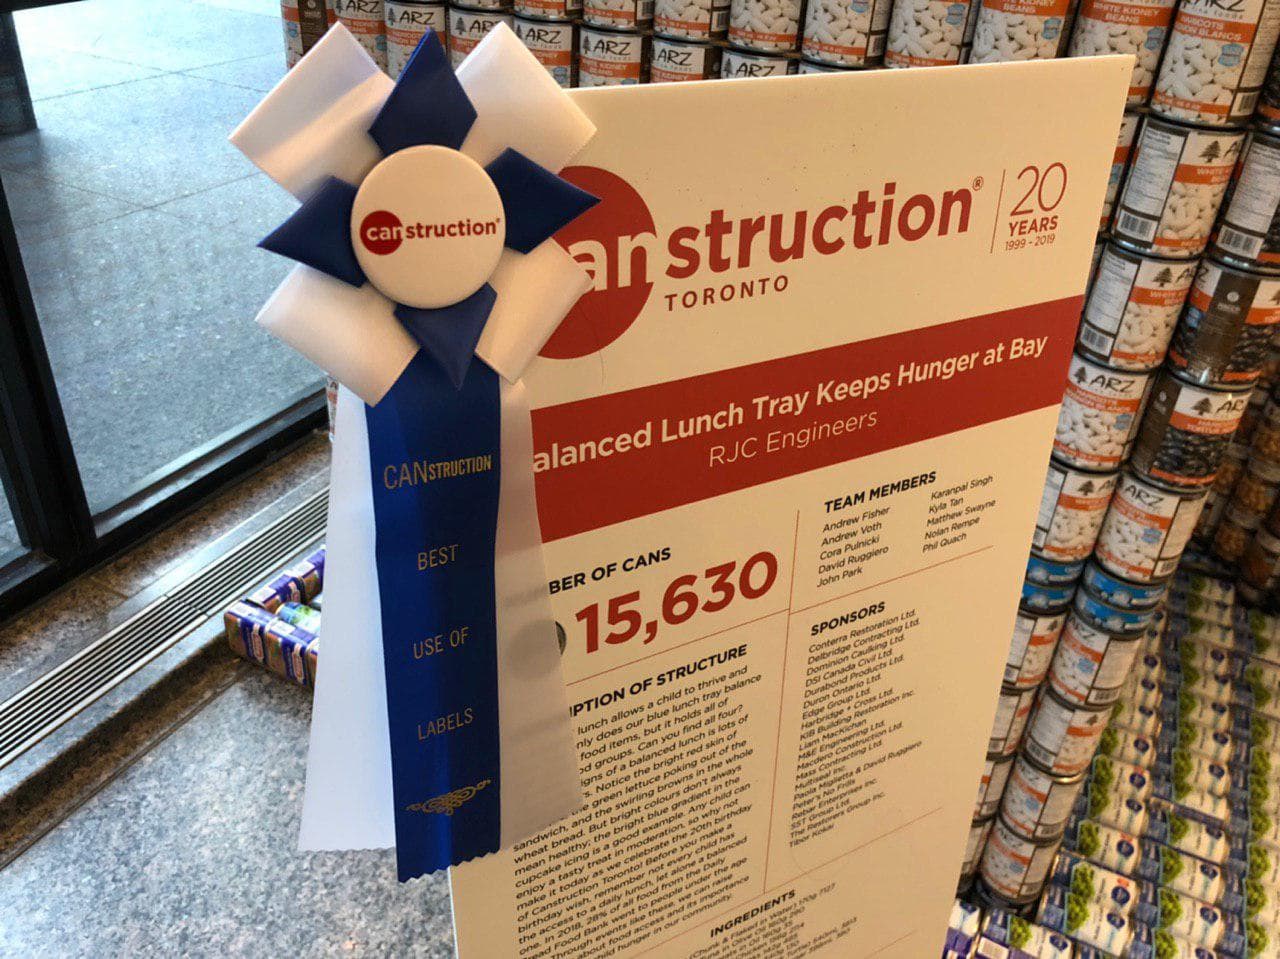 RJC Canstruction 2019 - 06 - Signage and Award Ribbon-min.jpg